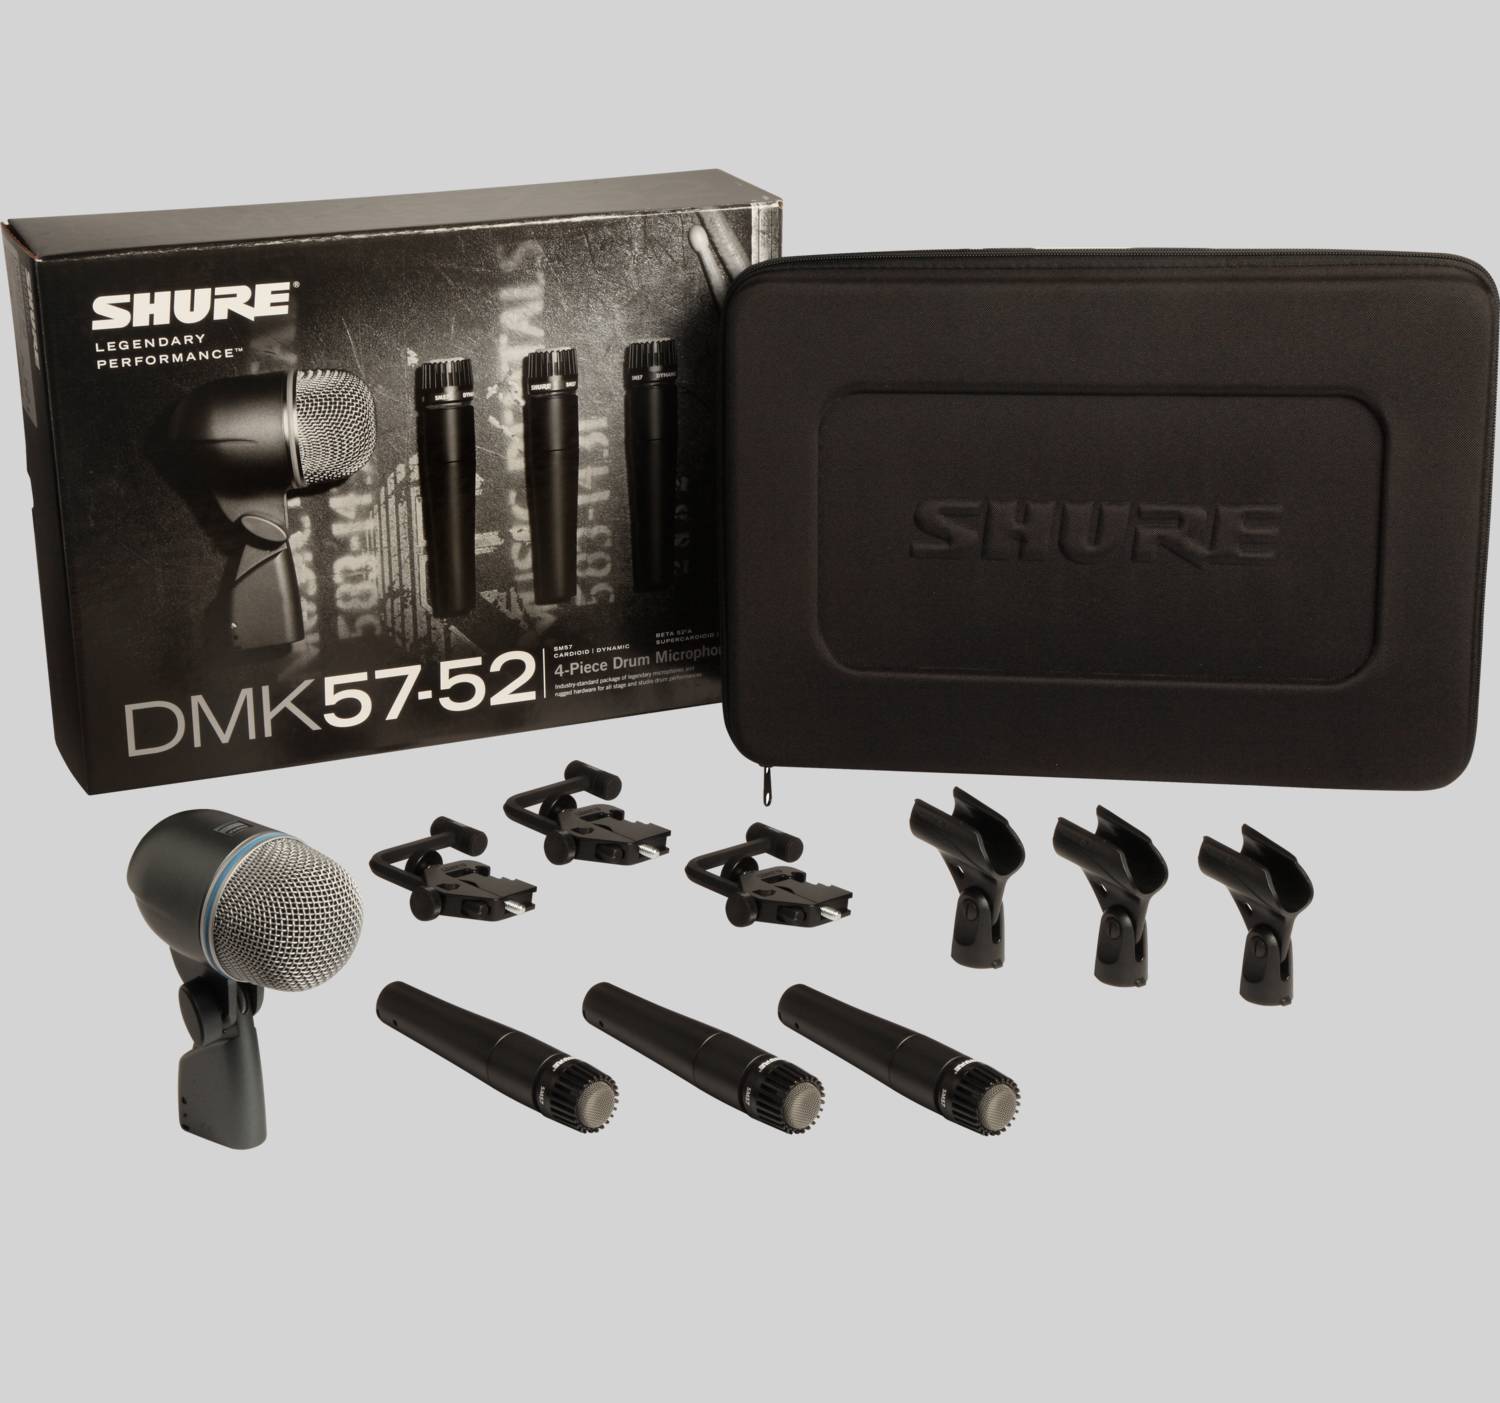 SHURE DMK57-52